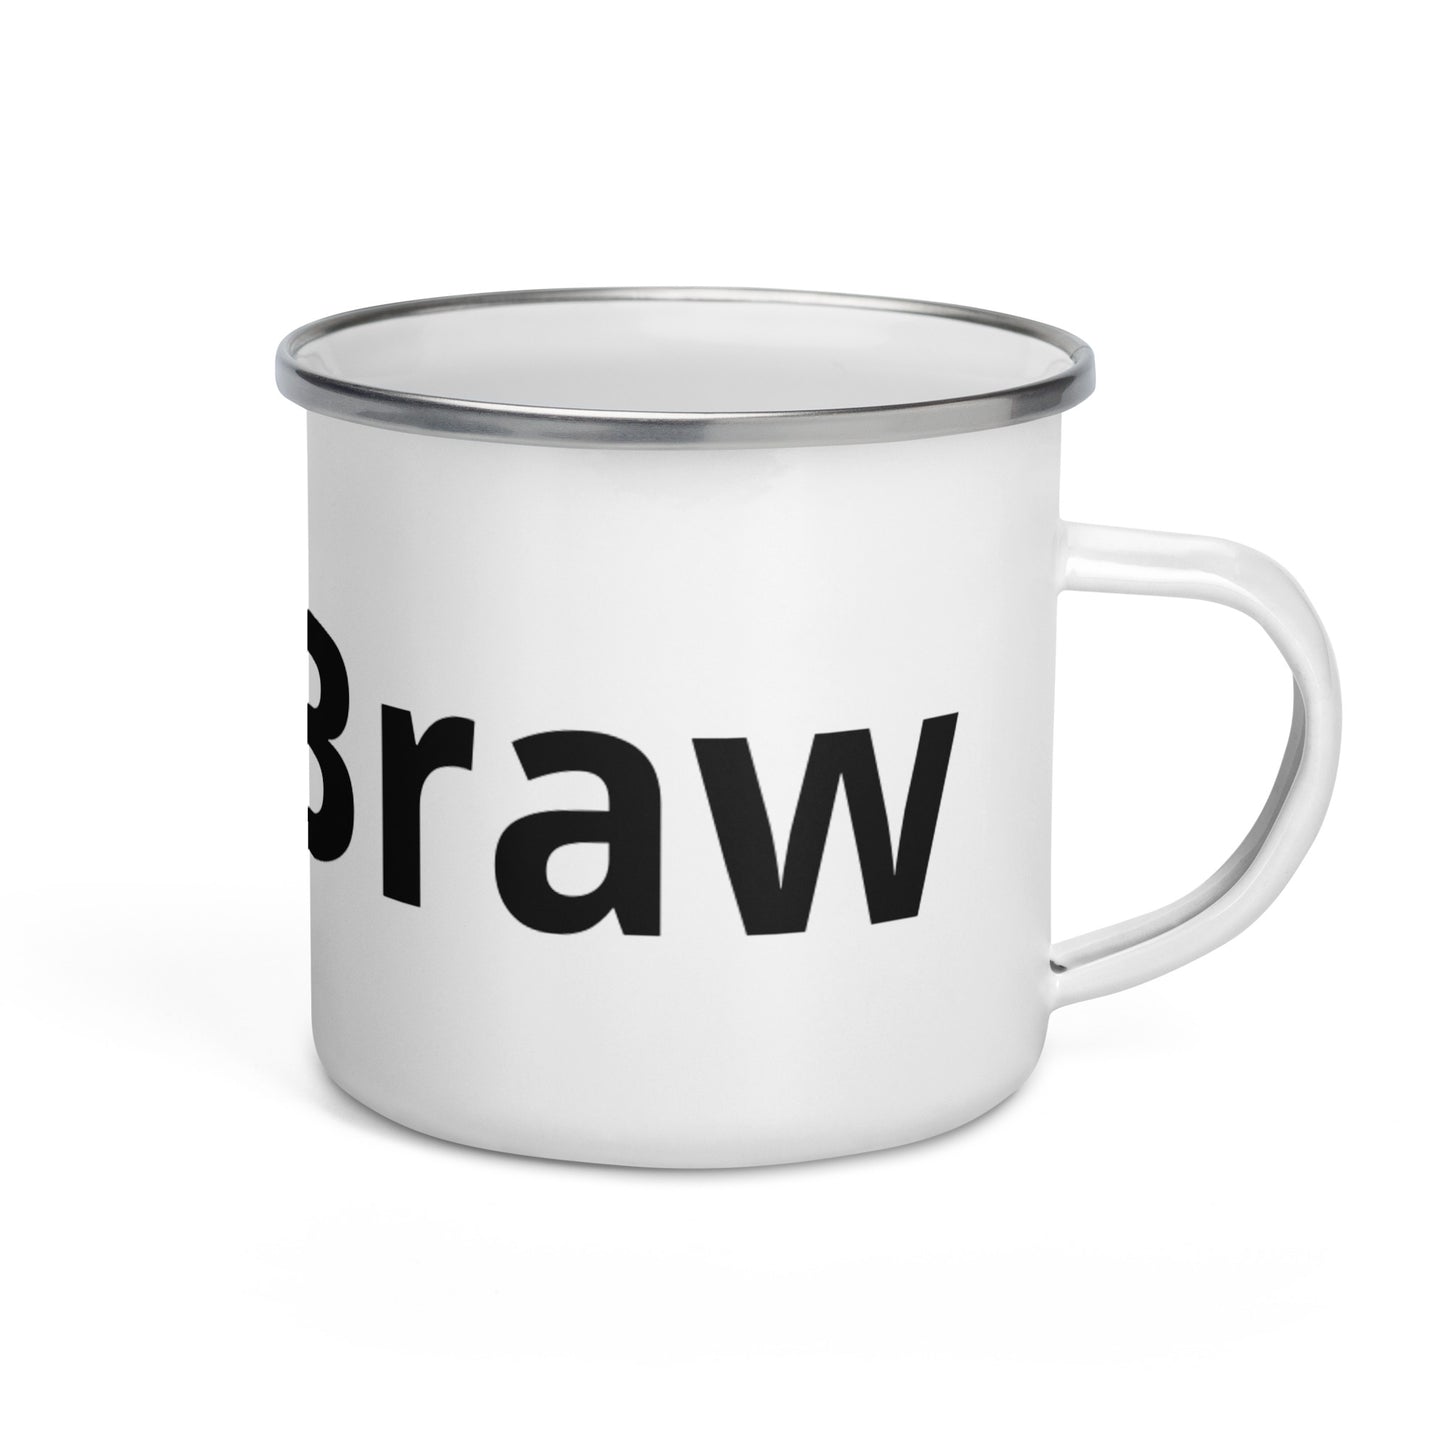 'Pure Braw' Scots Slang Enamel Mug